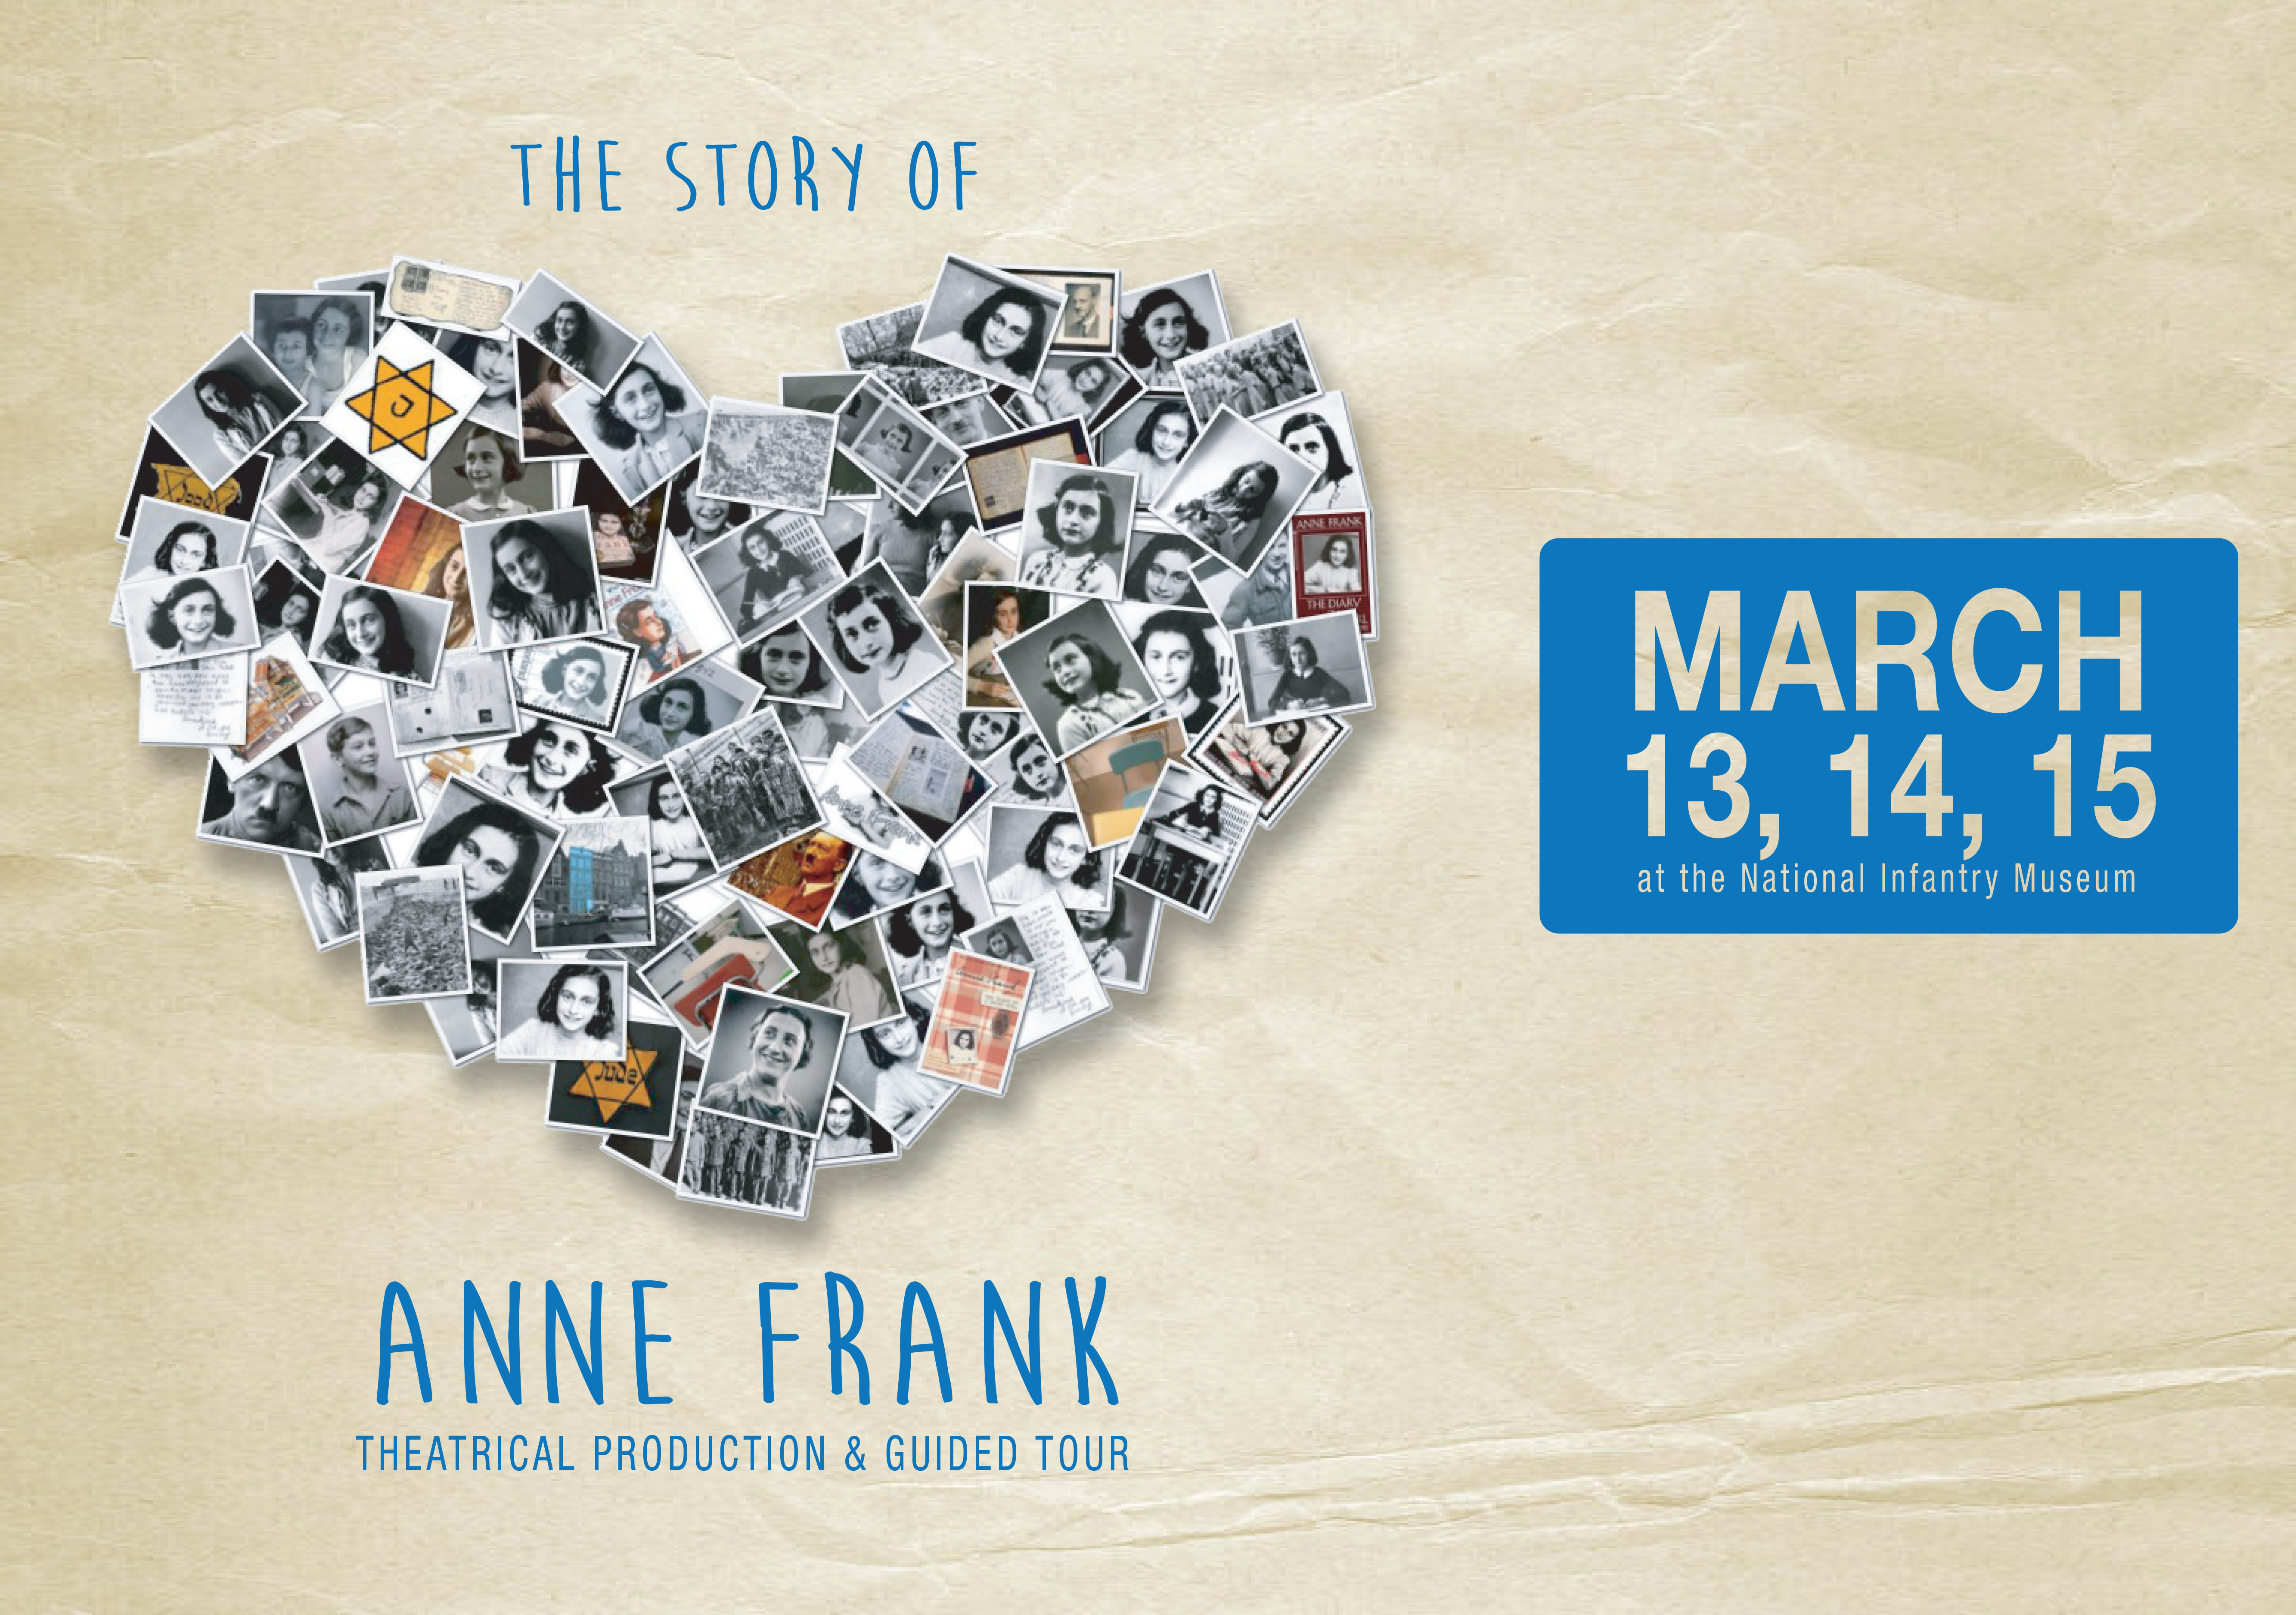 The Story of Anne Frank Visit Columbus, GA